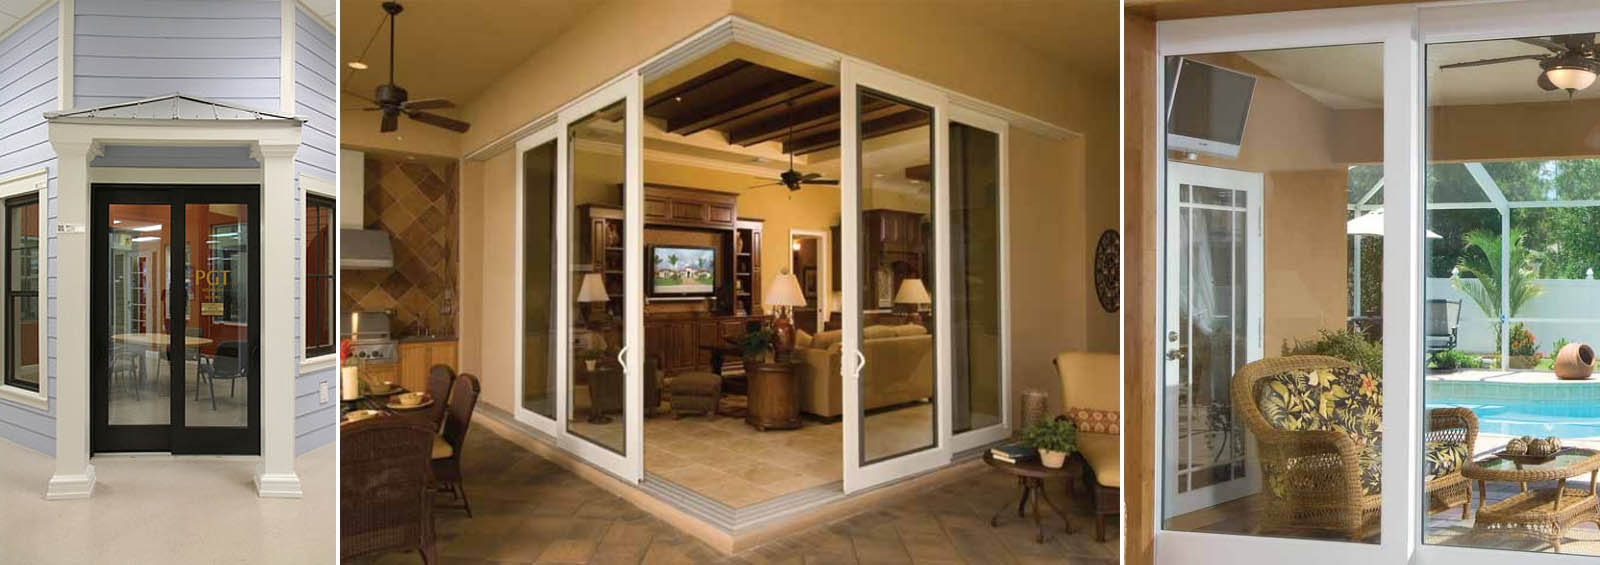 Sarasota Bradenton Pgt Swing Doors Dealer Installer Florida throughout dimensions 1600 X 565